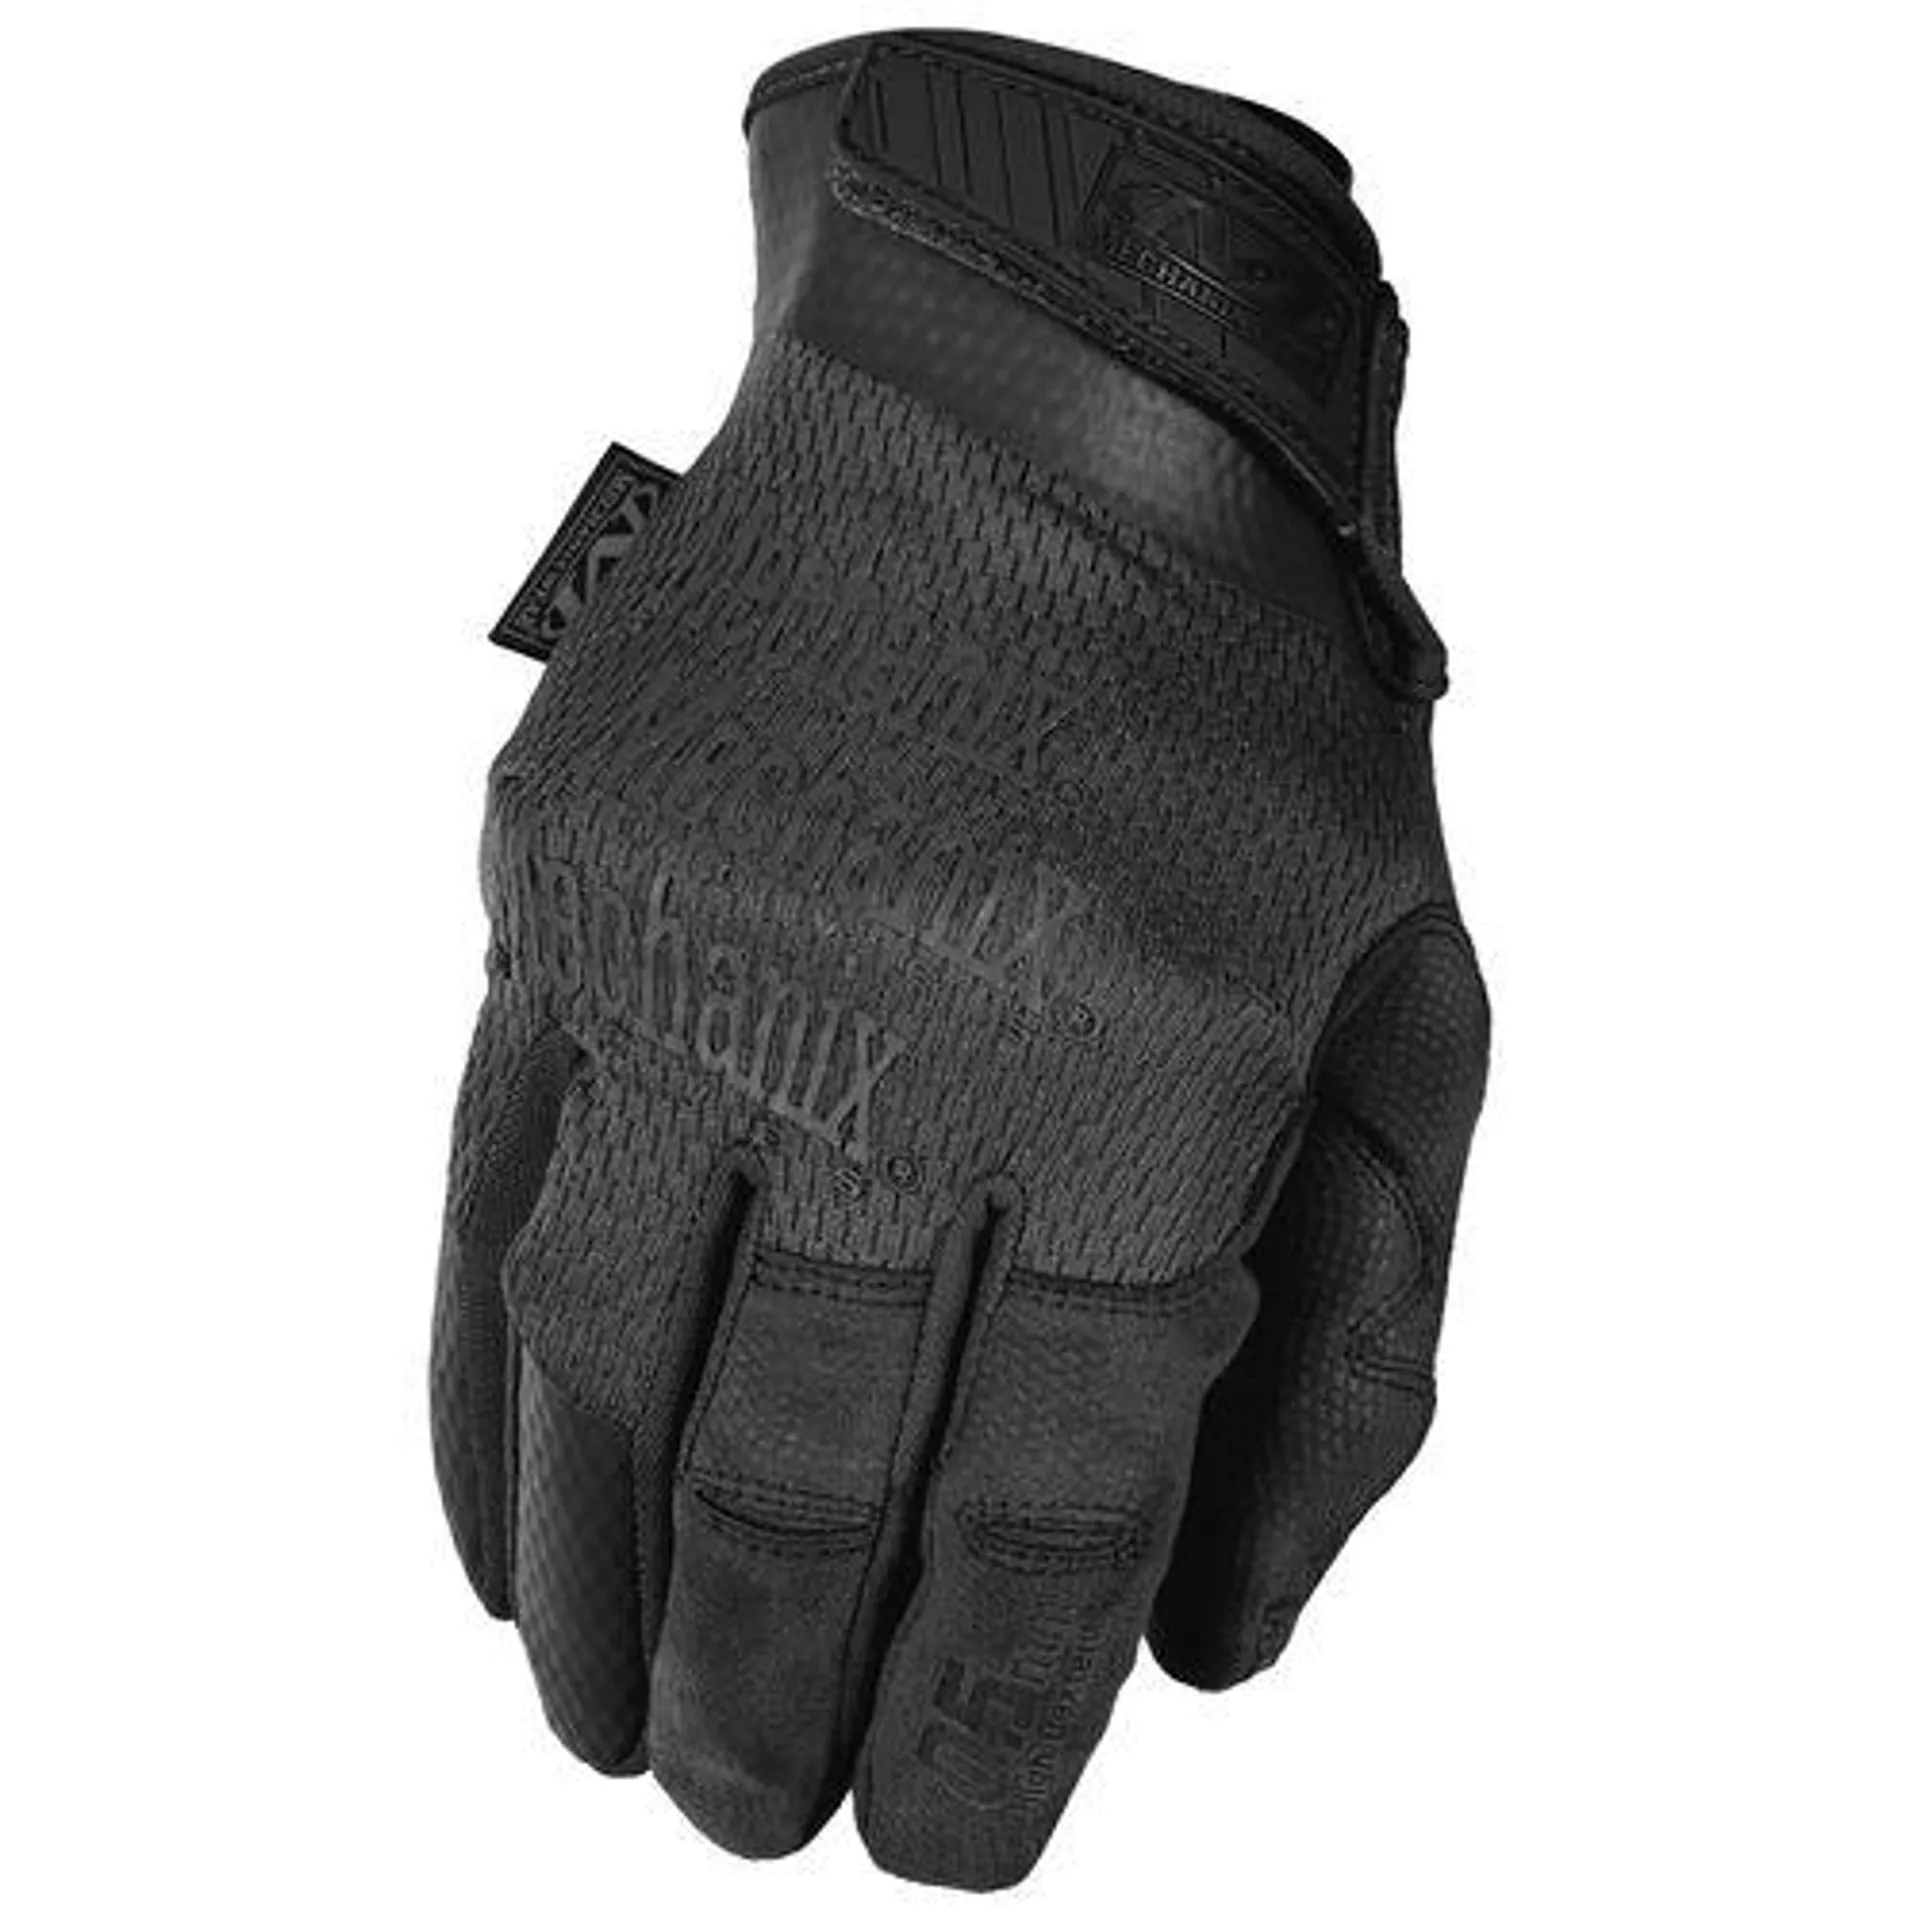 Mechanix Wear Specialty 0.5mm Covert Gloves - Small